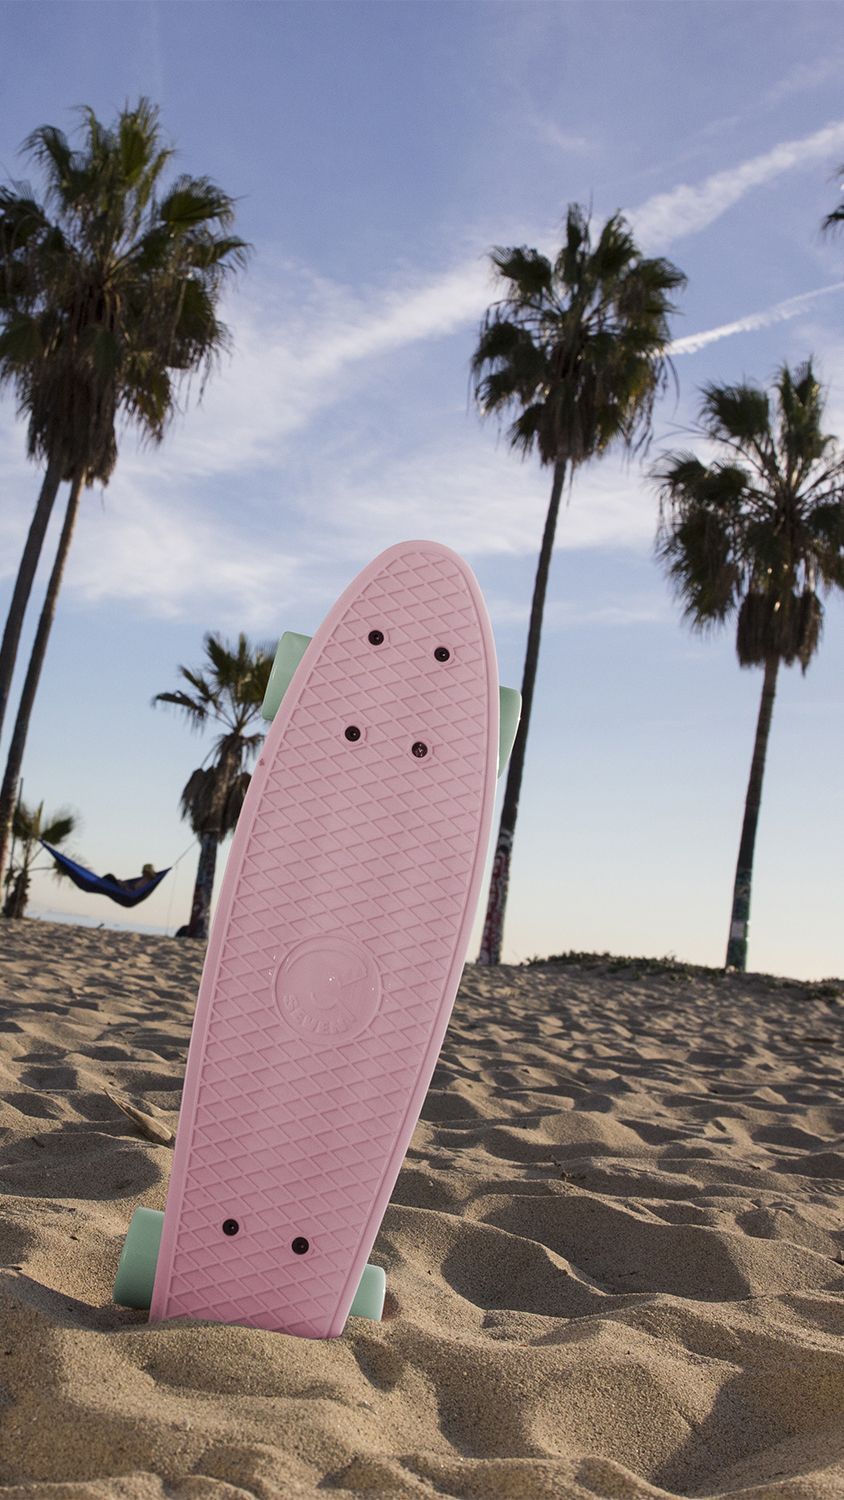 California skate vibes ✌. Skateboard photography, Skateboard, Skateboard design